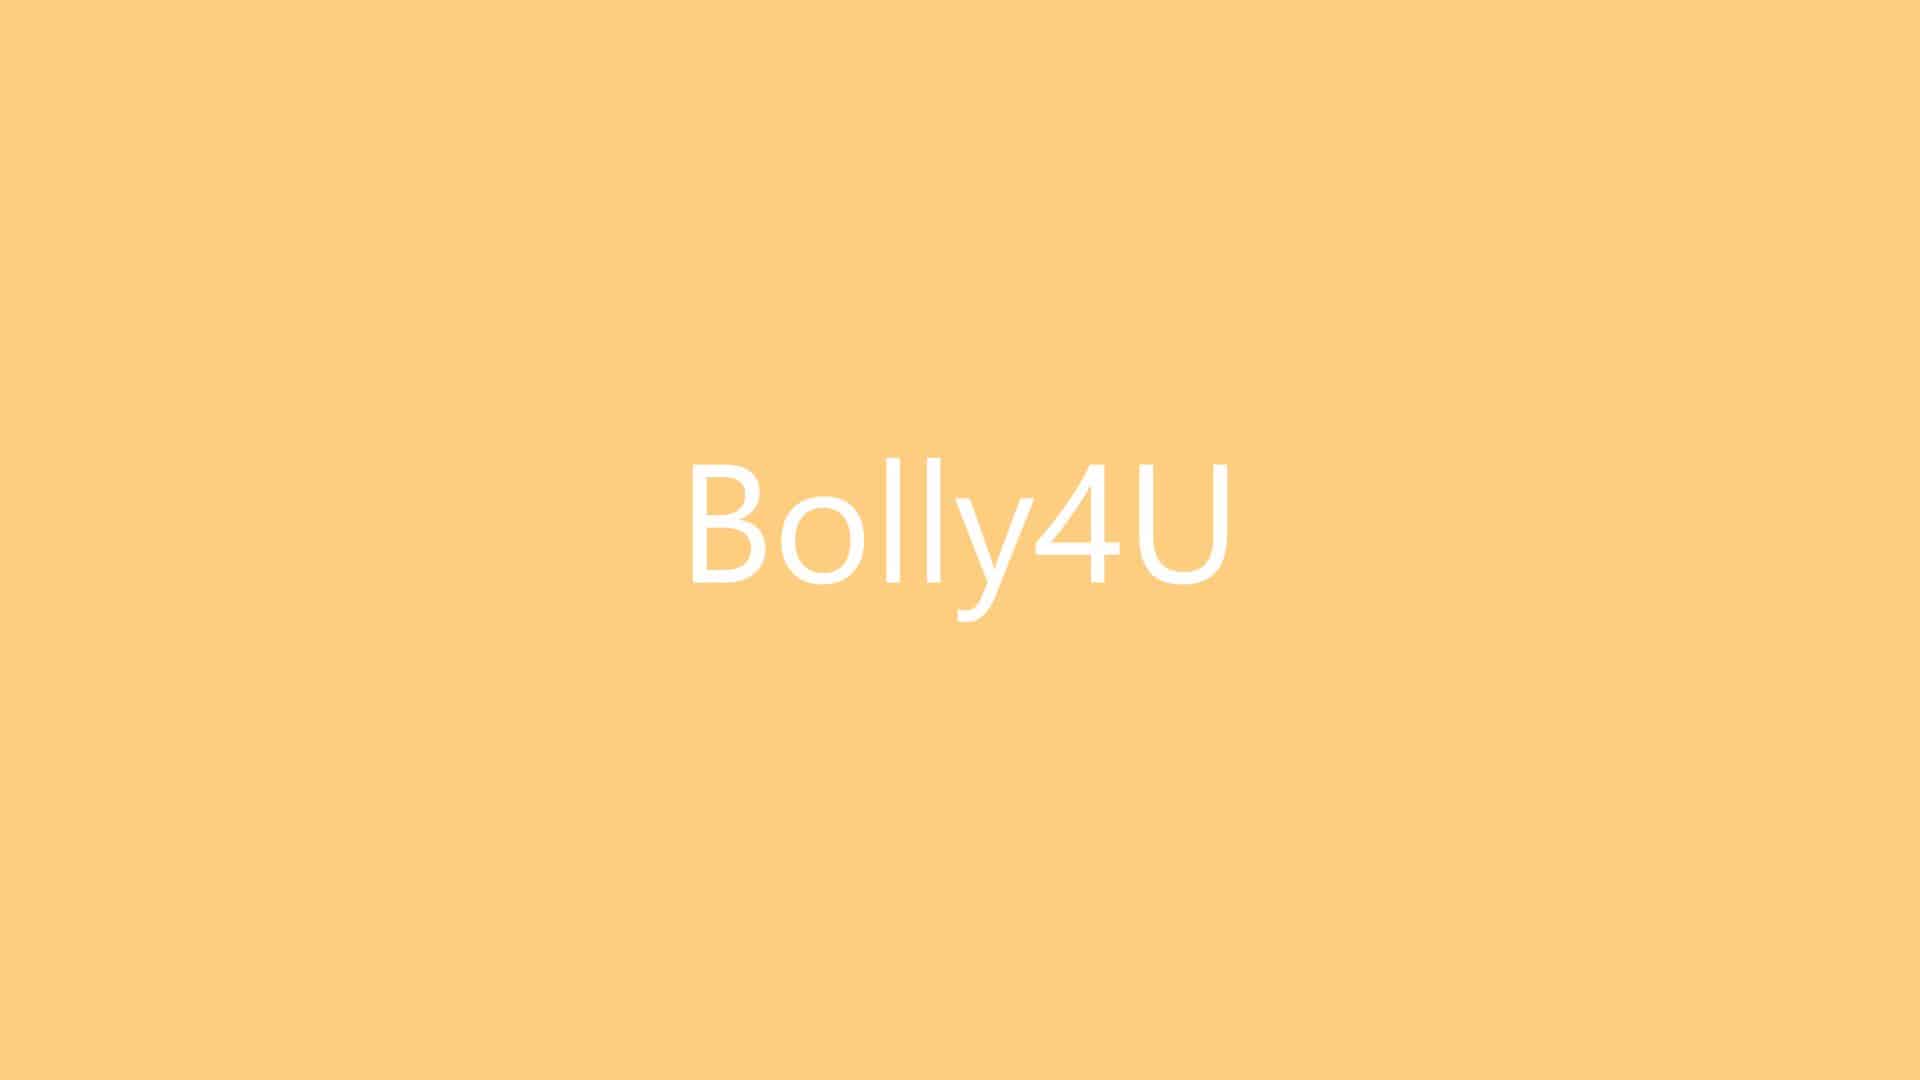 bolly4u movies 2019